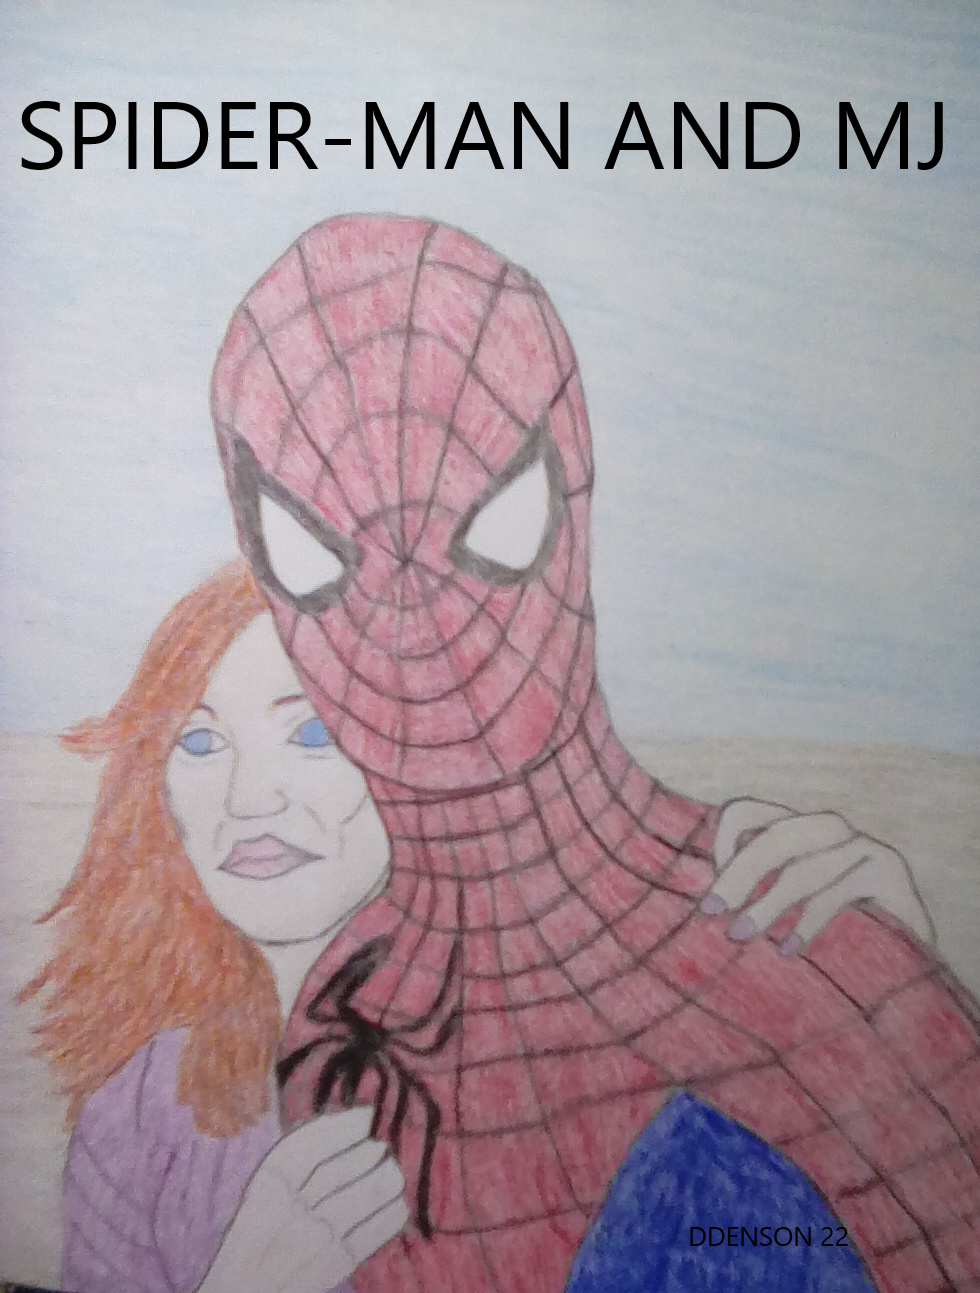 Spider-man Painting by KenHogan on DeviantArt